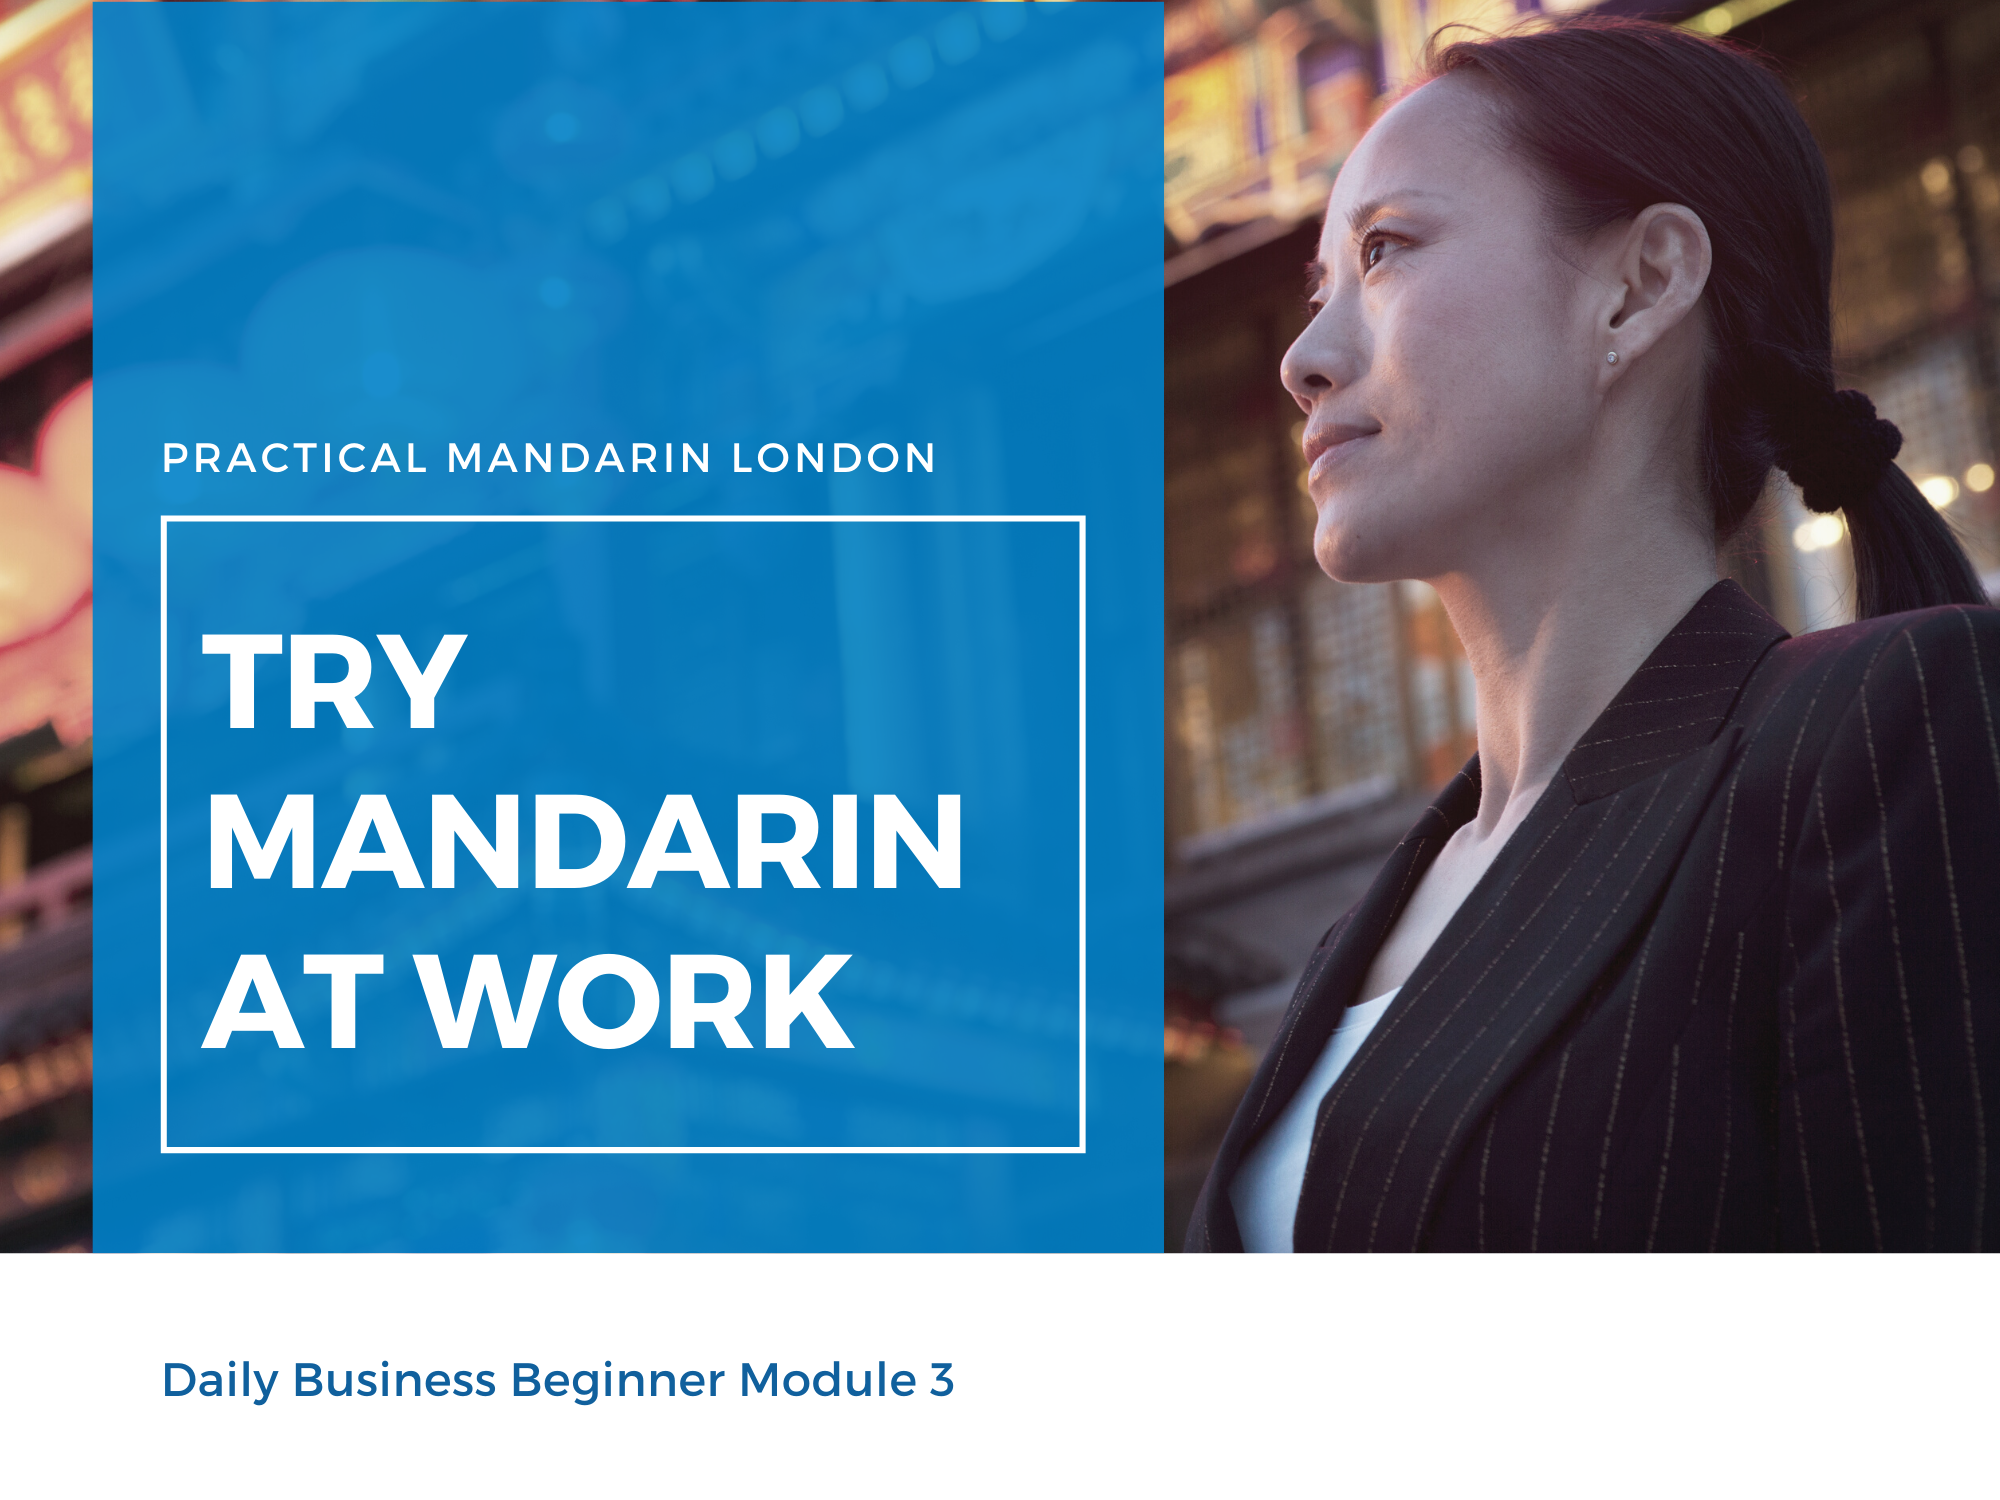 Practical Mandarin Cover image of daily business mandarin beginner module 3